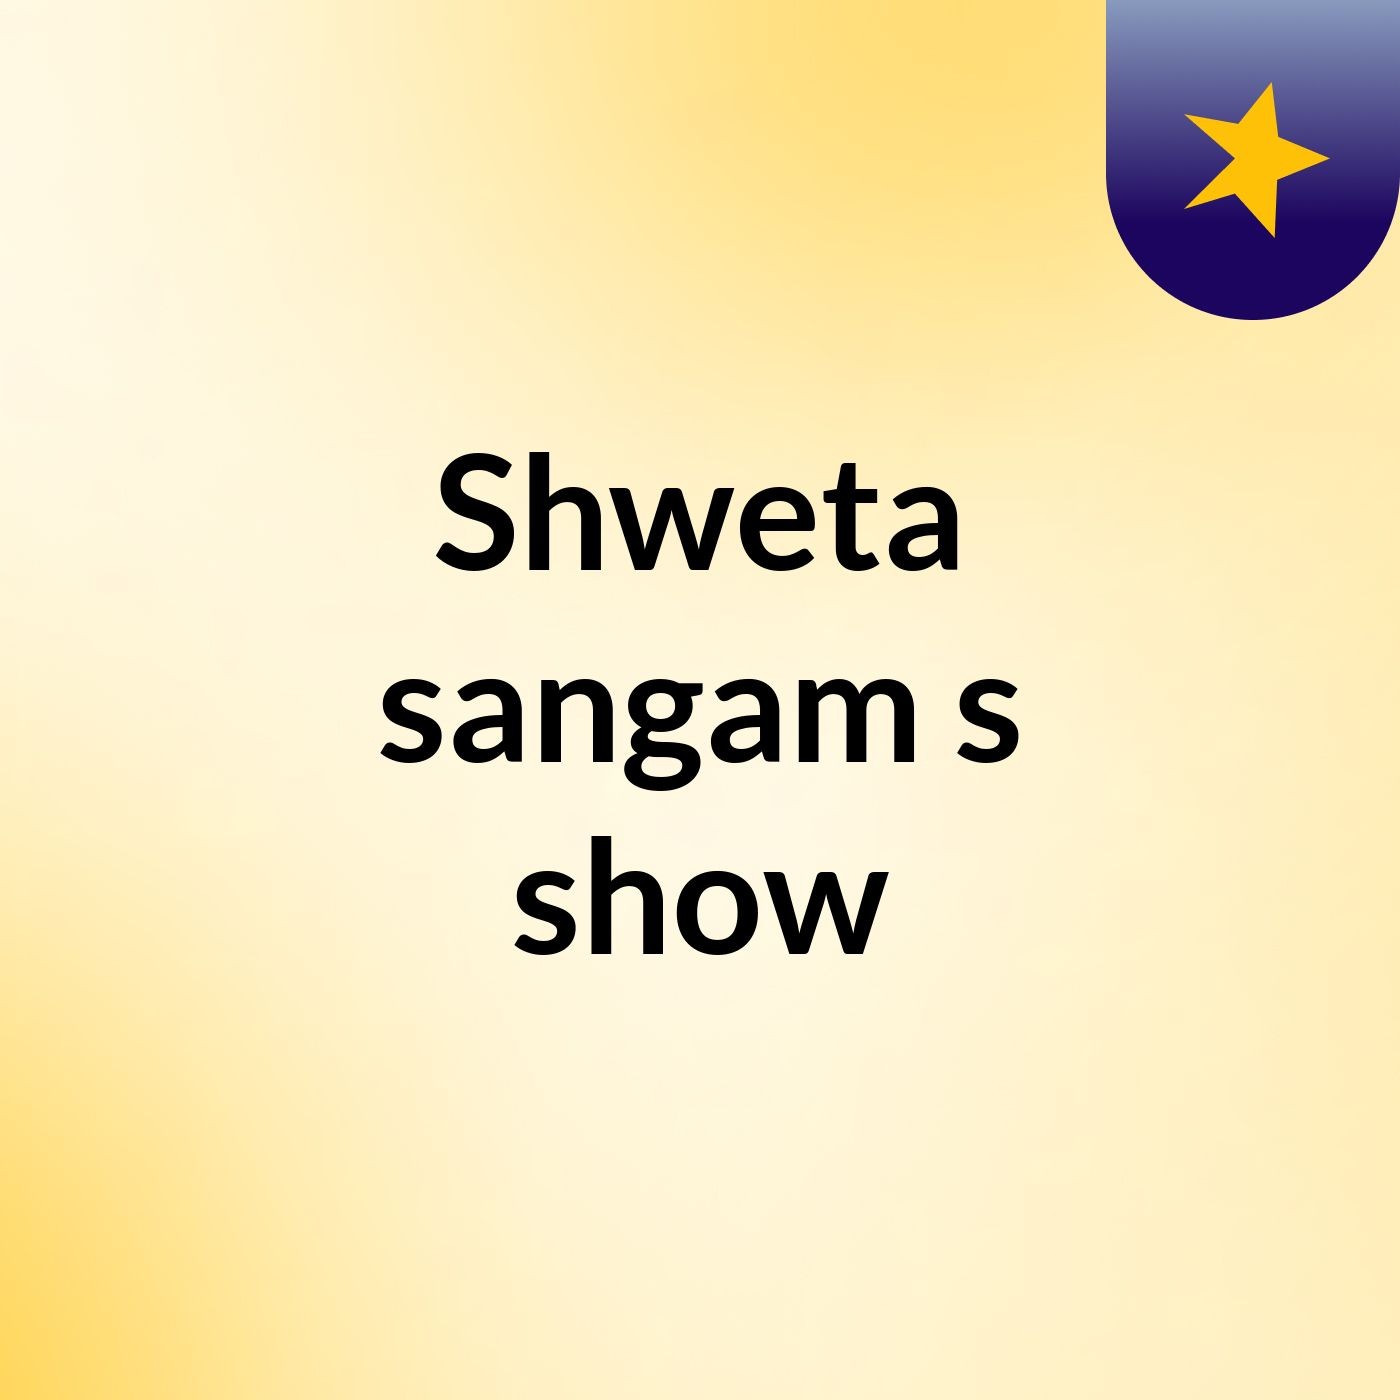 Shweta sangam's show